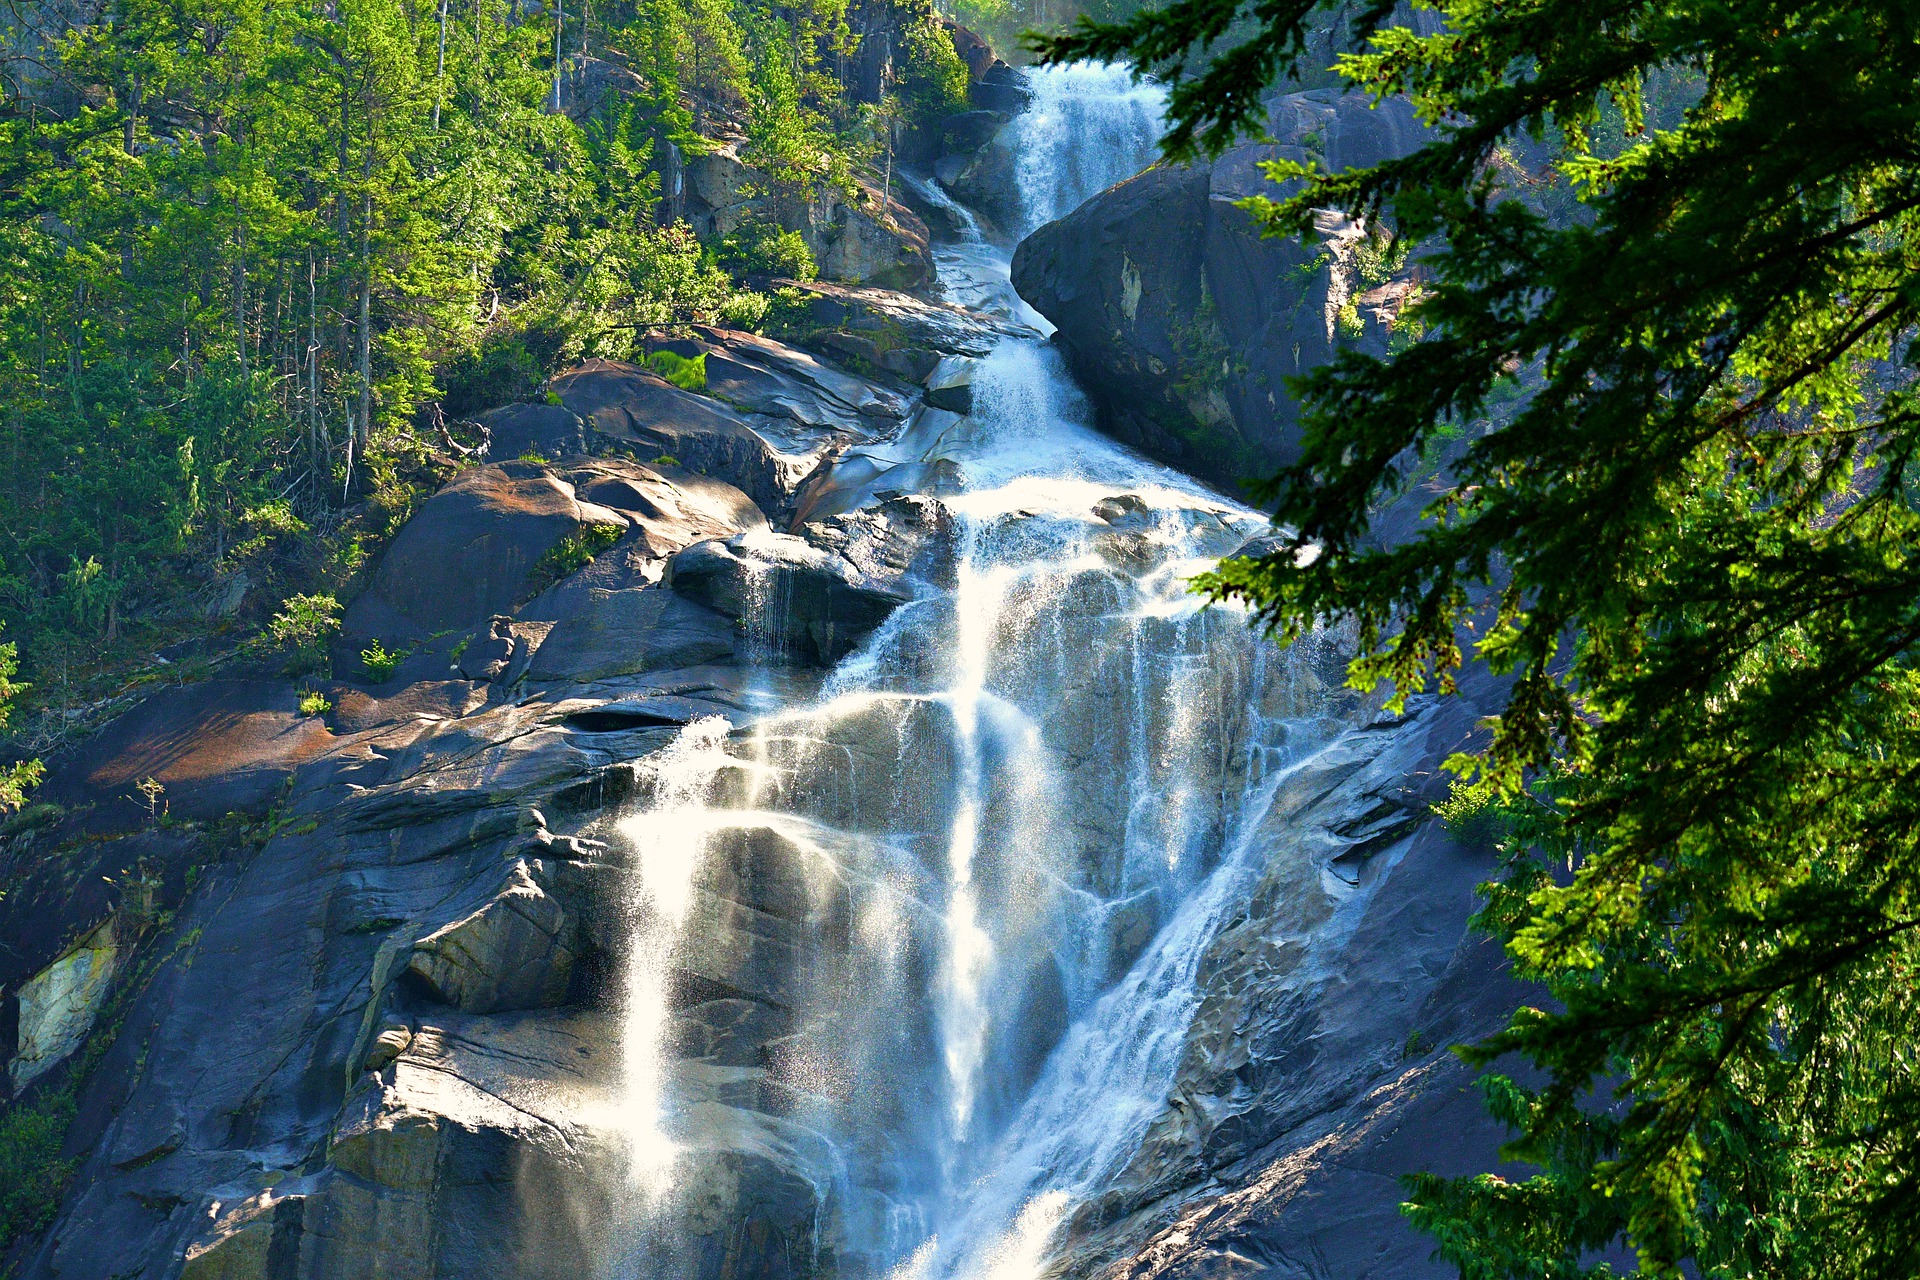 Photo of cascading waterfalls